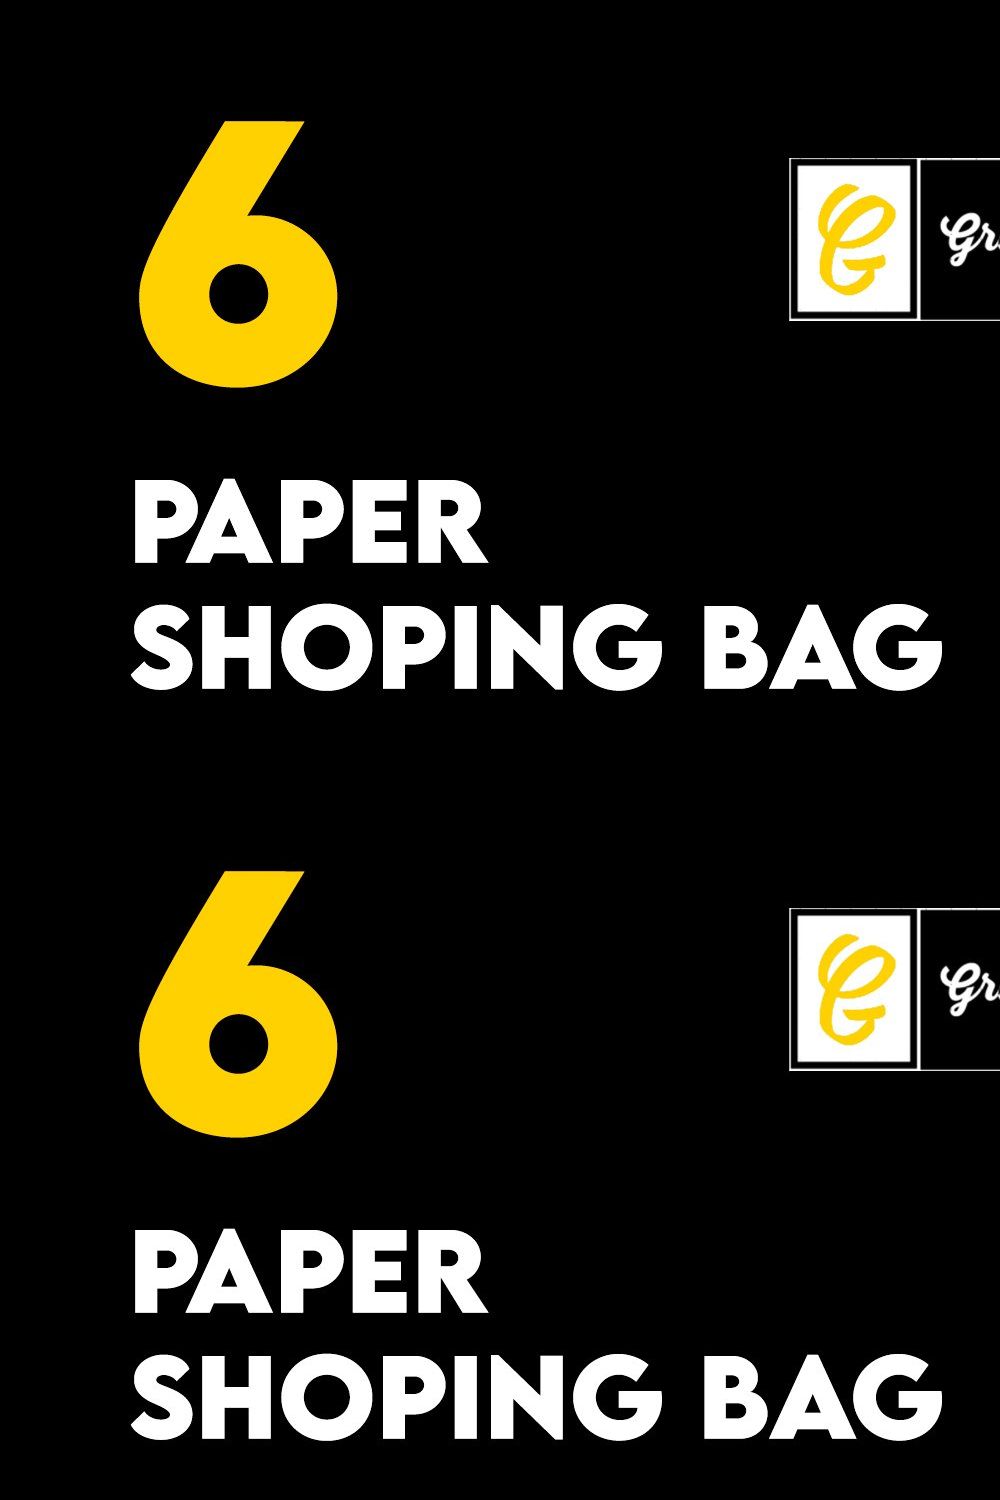 Paper Shoping bag mockup pinterest preview image.